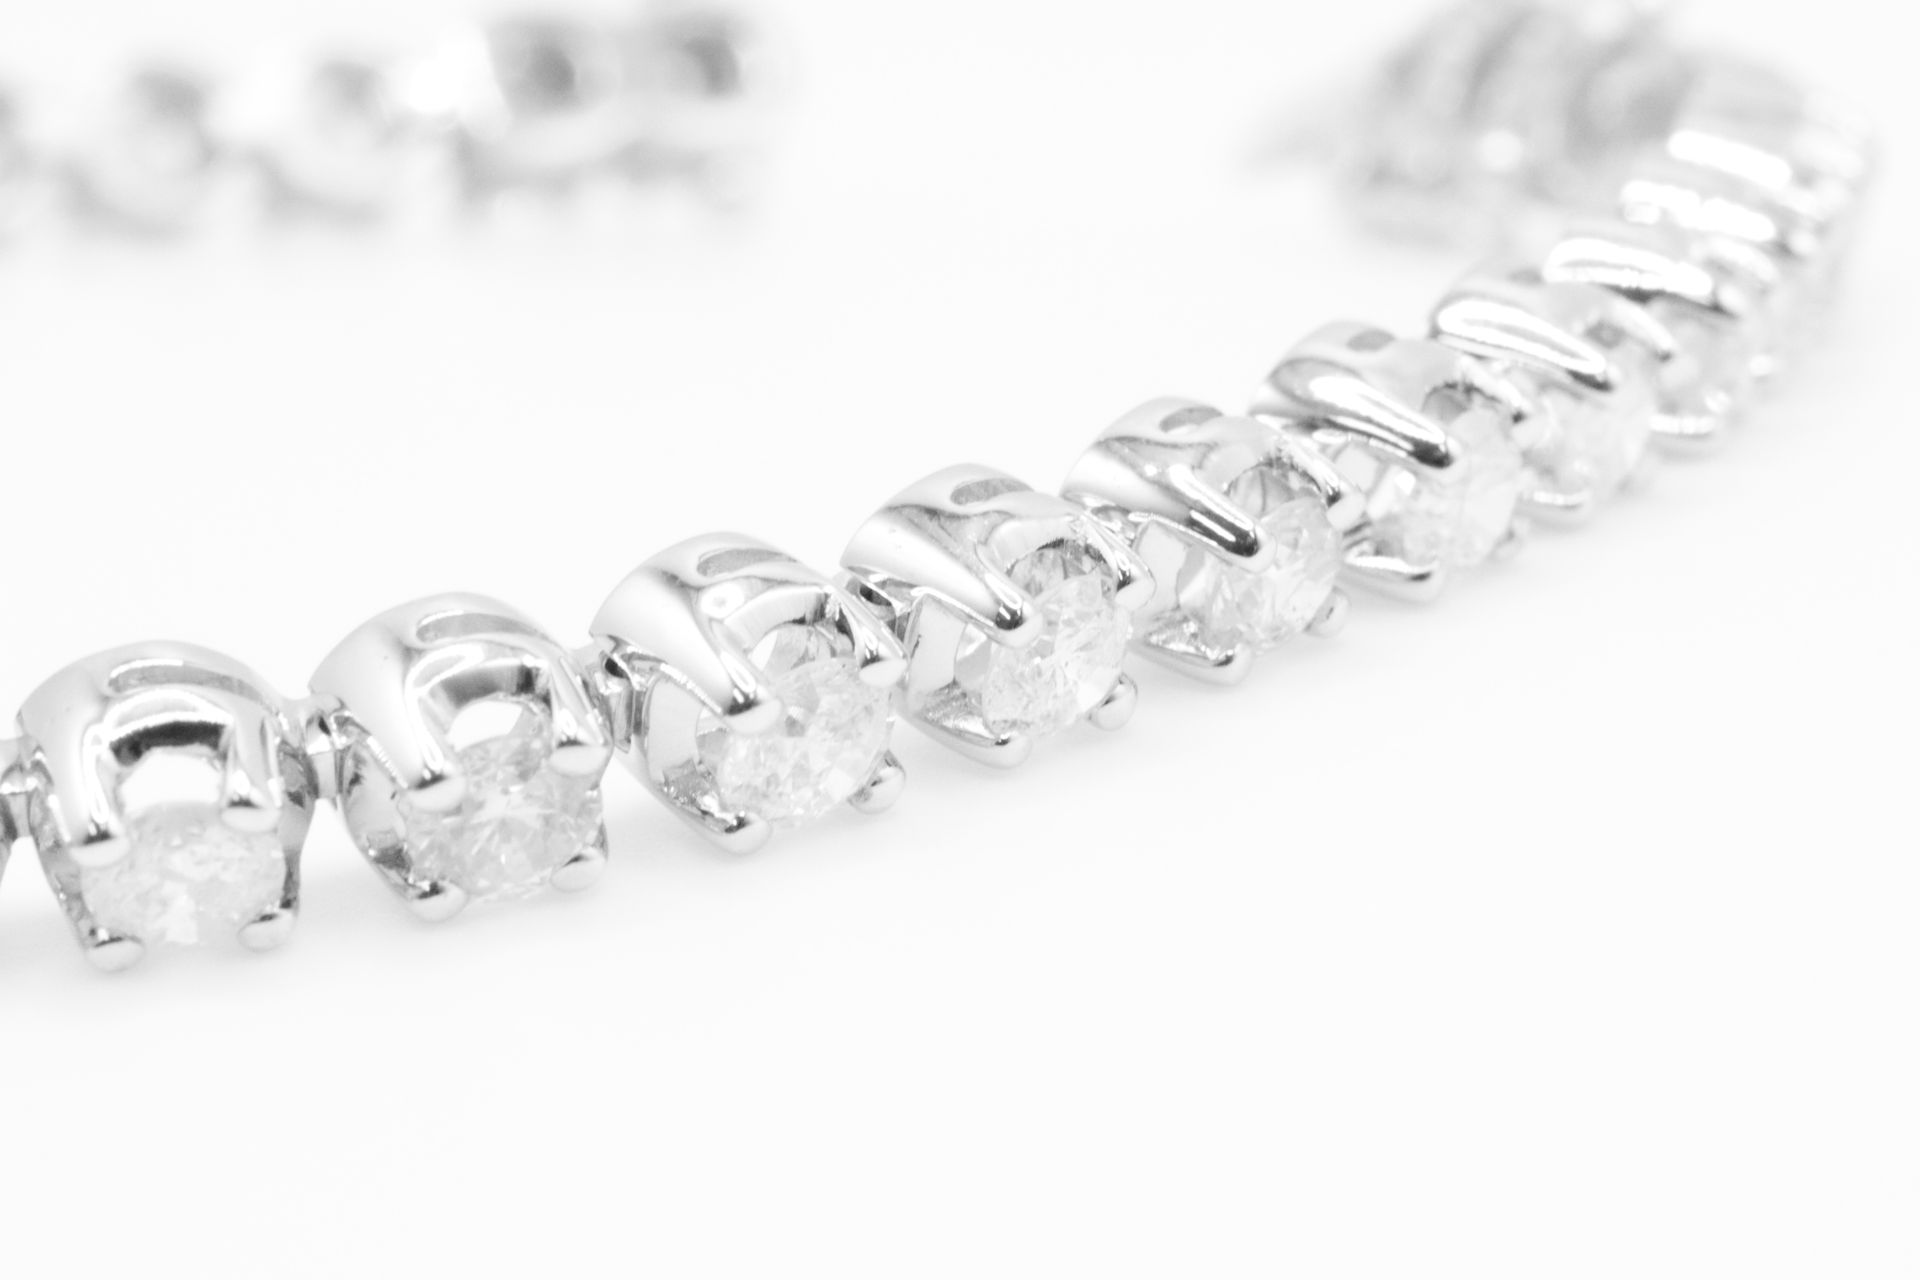 7.0 Carat 18ct White Gold Tennis Bracelet set with Round Brilliant Cut Natural Diamonds - Image 4 of 16